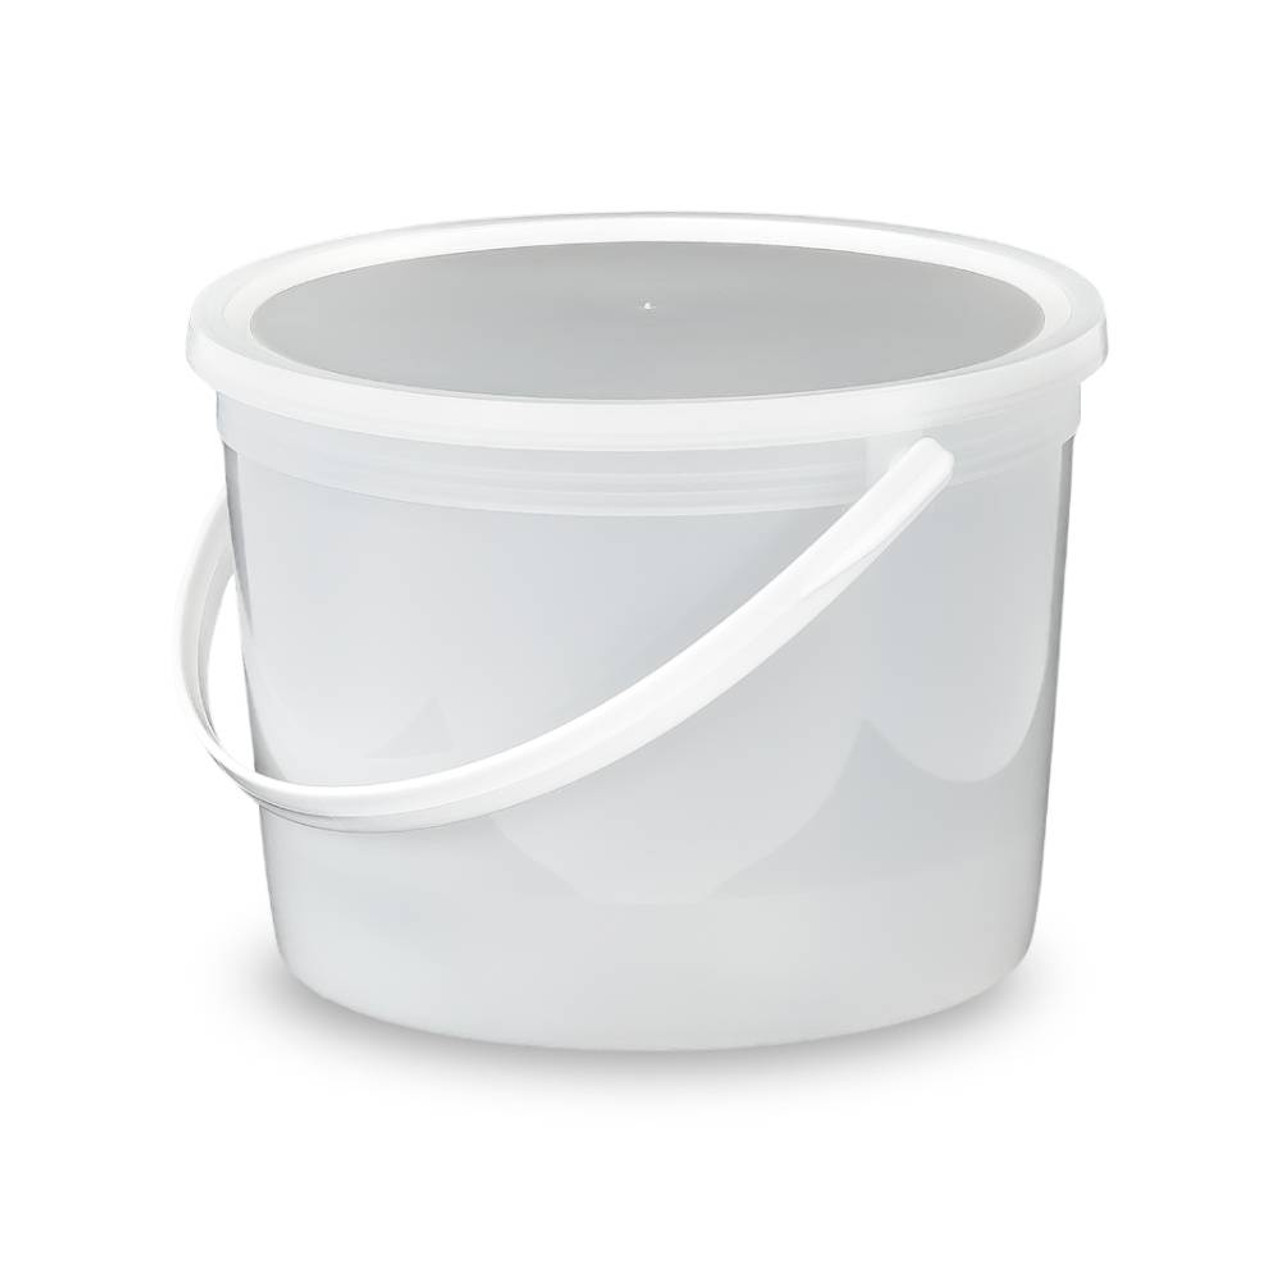 1/2 Gallon (64 oz.) BPA Free Food Grade Round Bucket with Lid